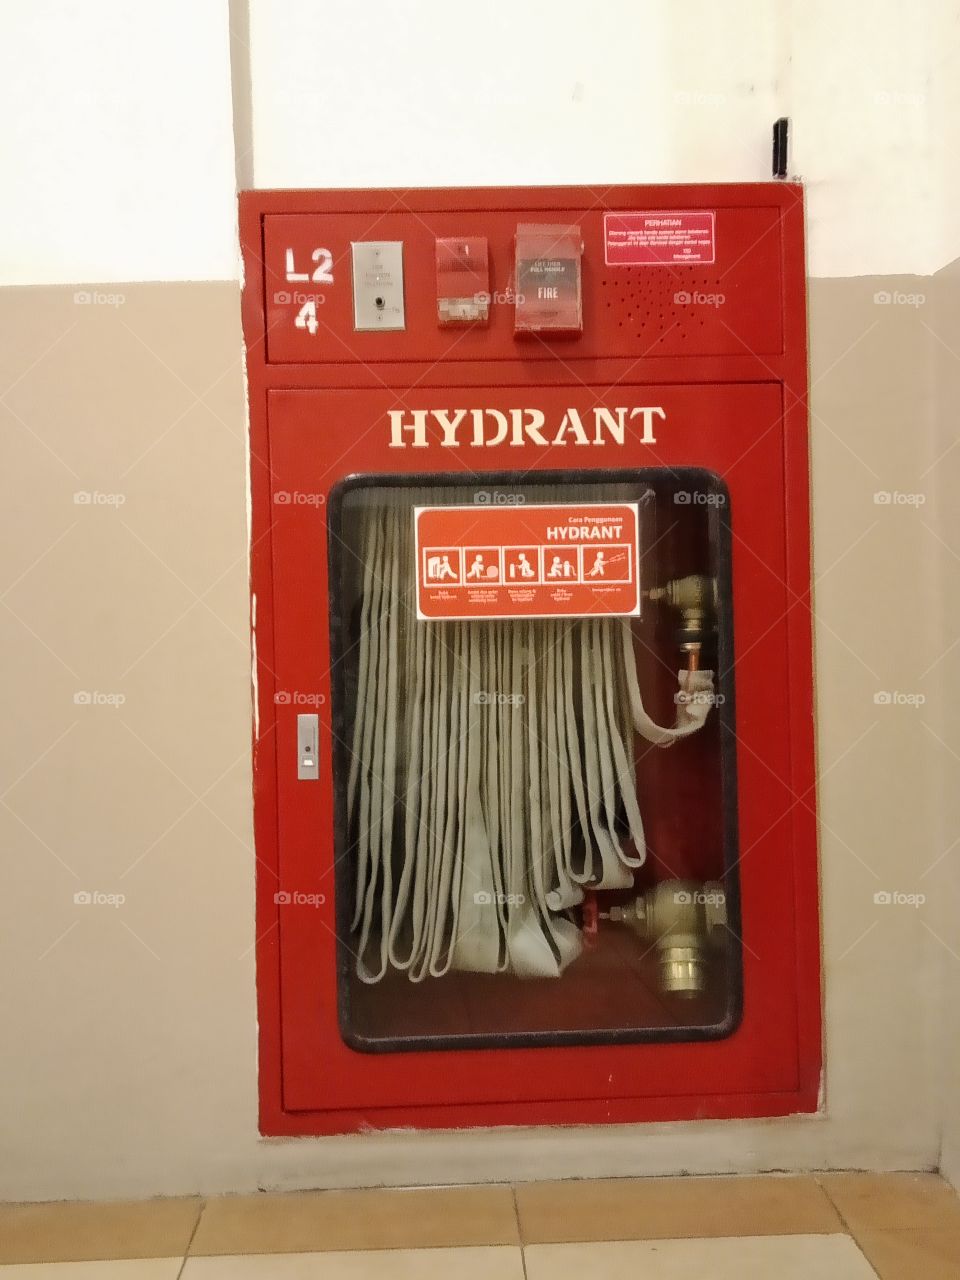 hydrant for emergency